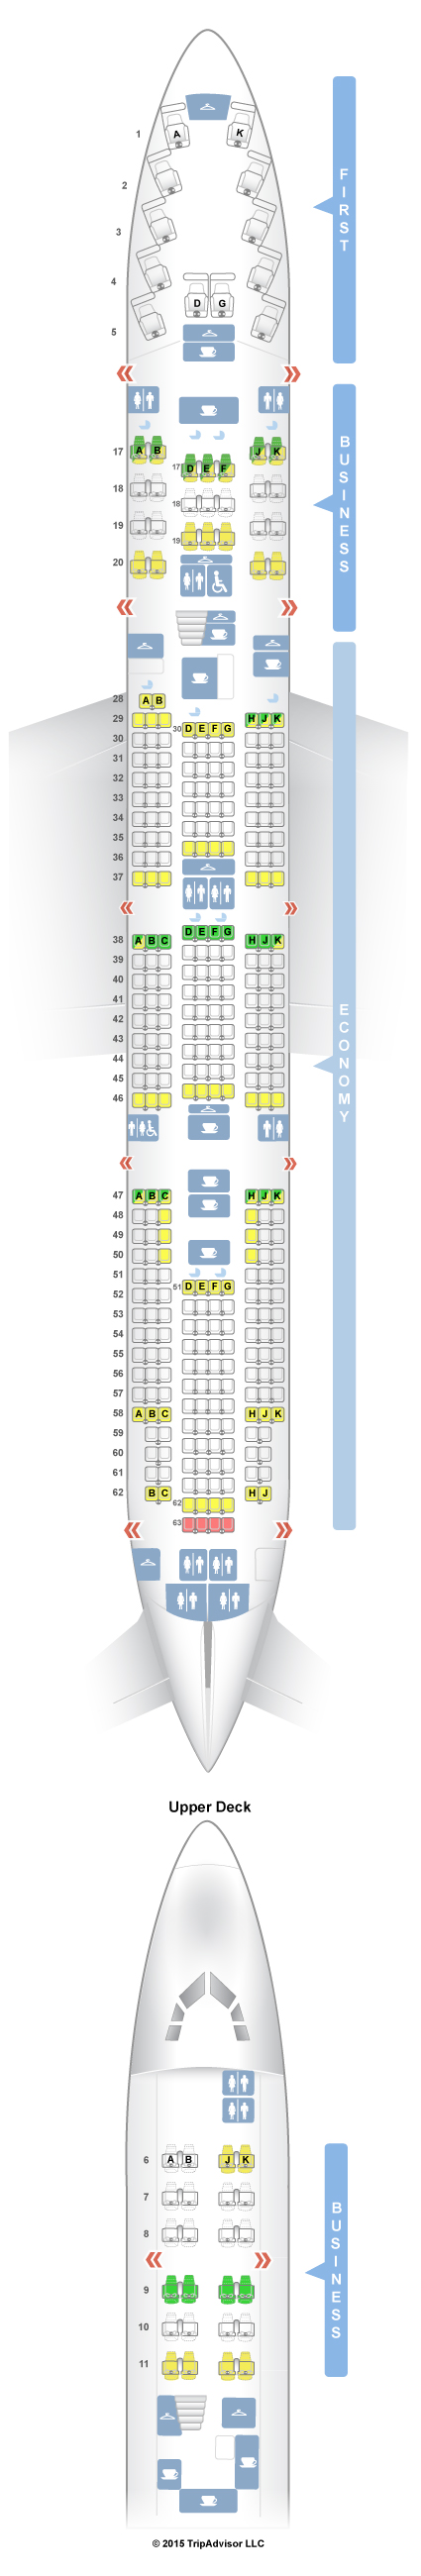 Lufthansa Seating Chart Boeing 747 400